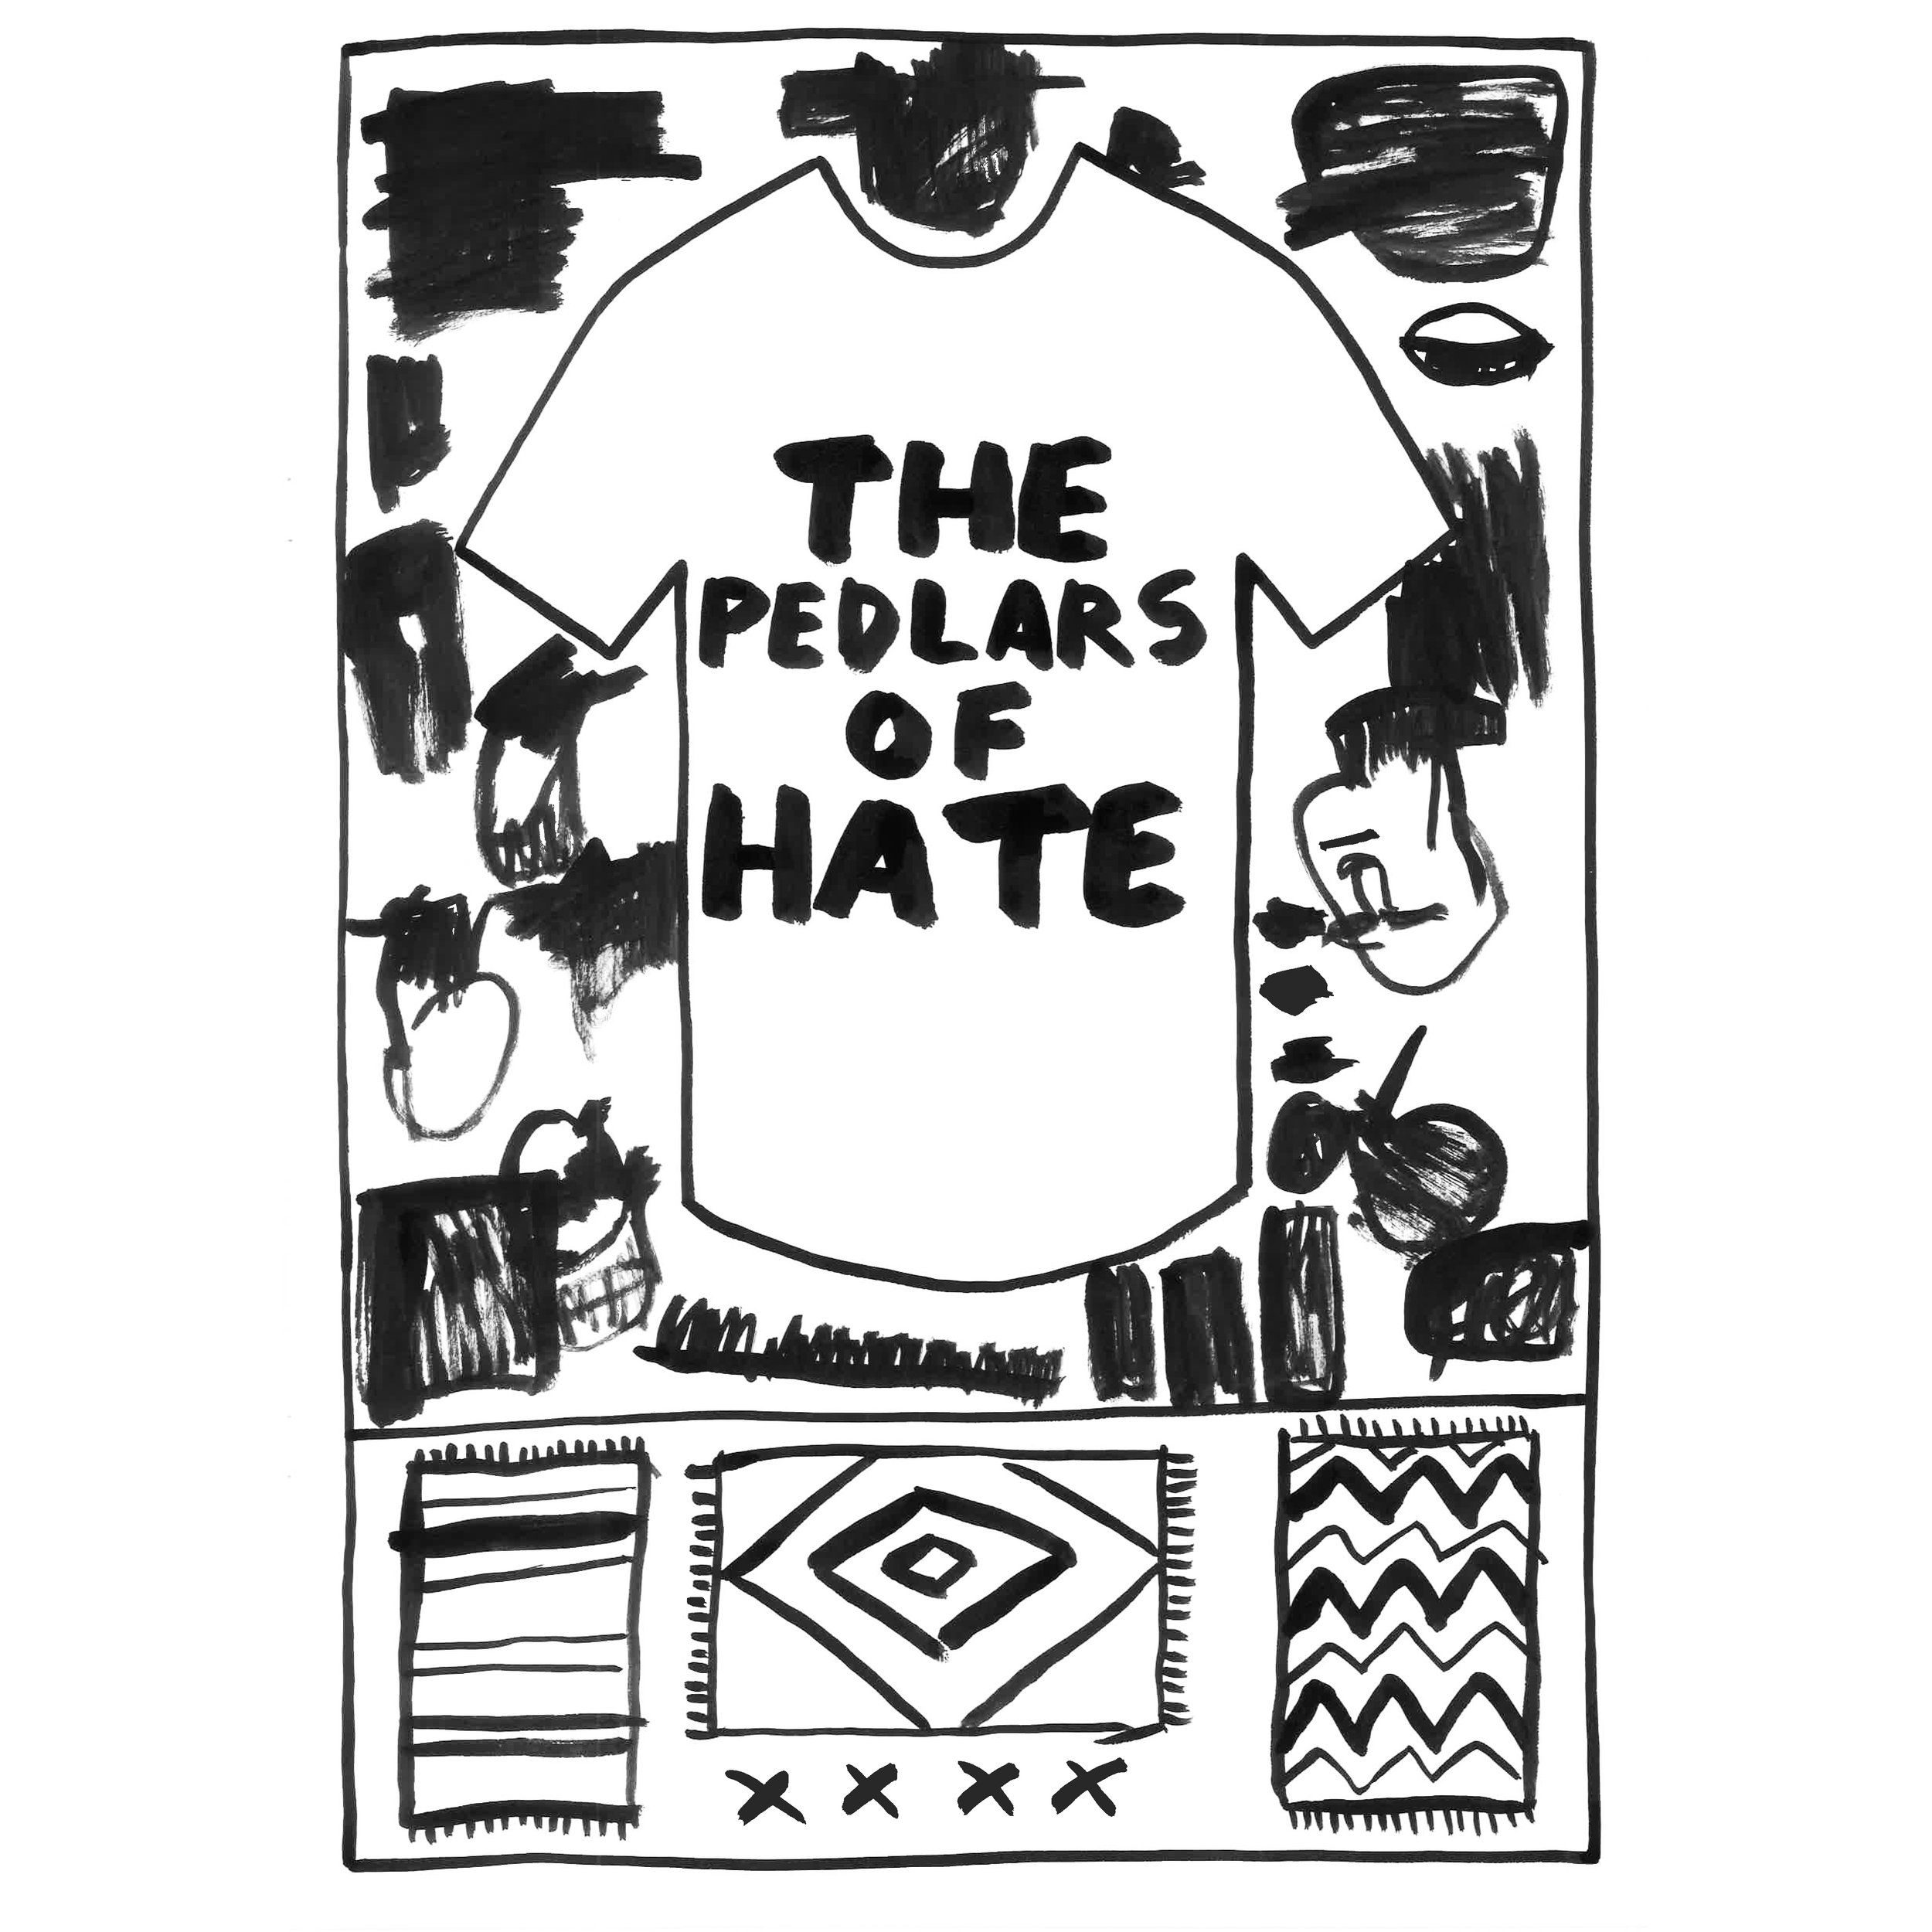 The Pedlars of Hate.jpg